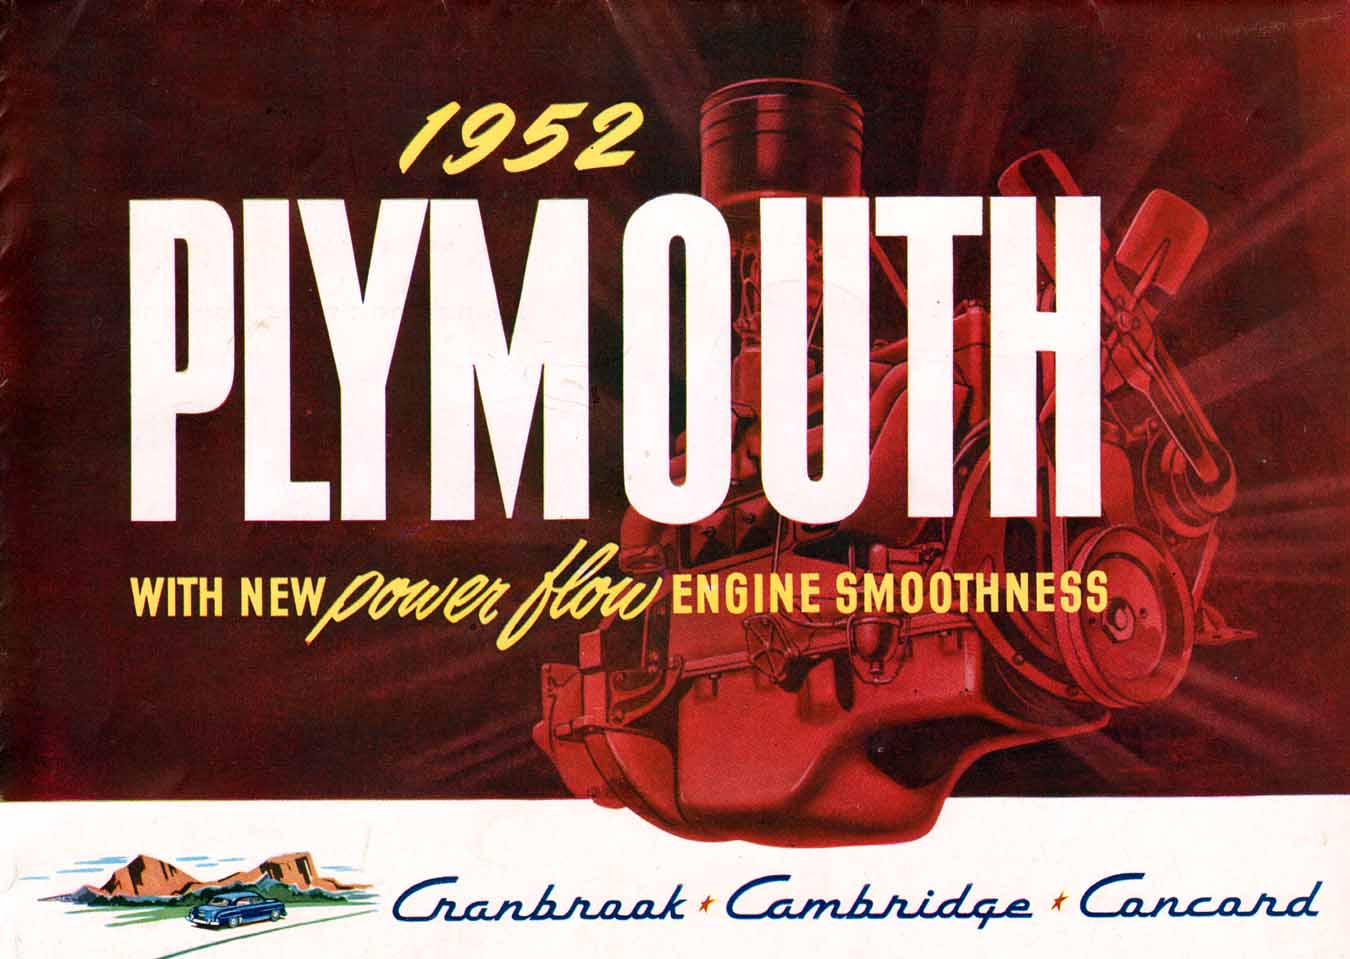 1952_Plymouth_Foldout-01